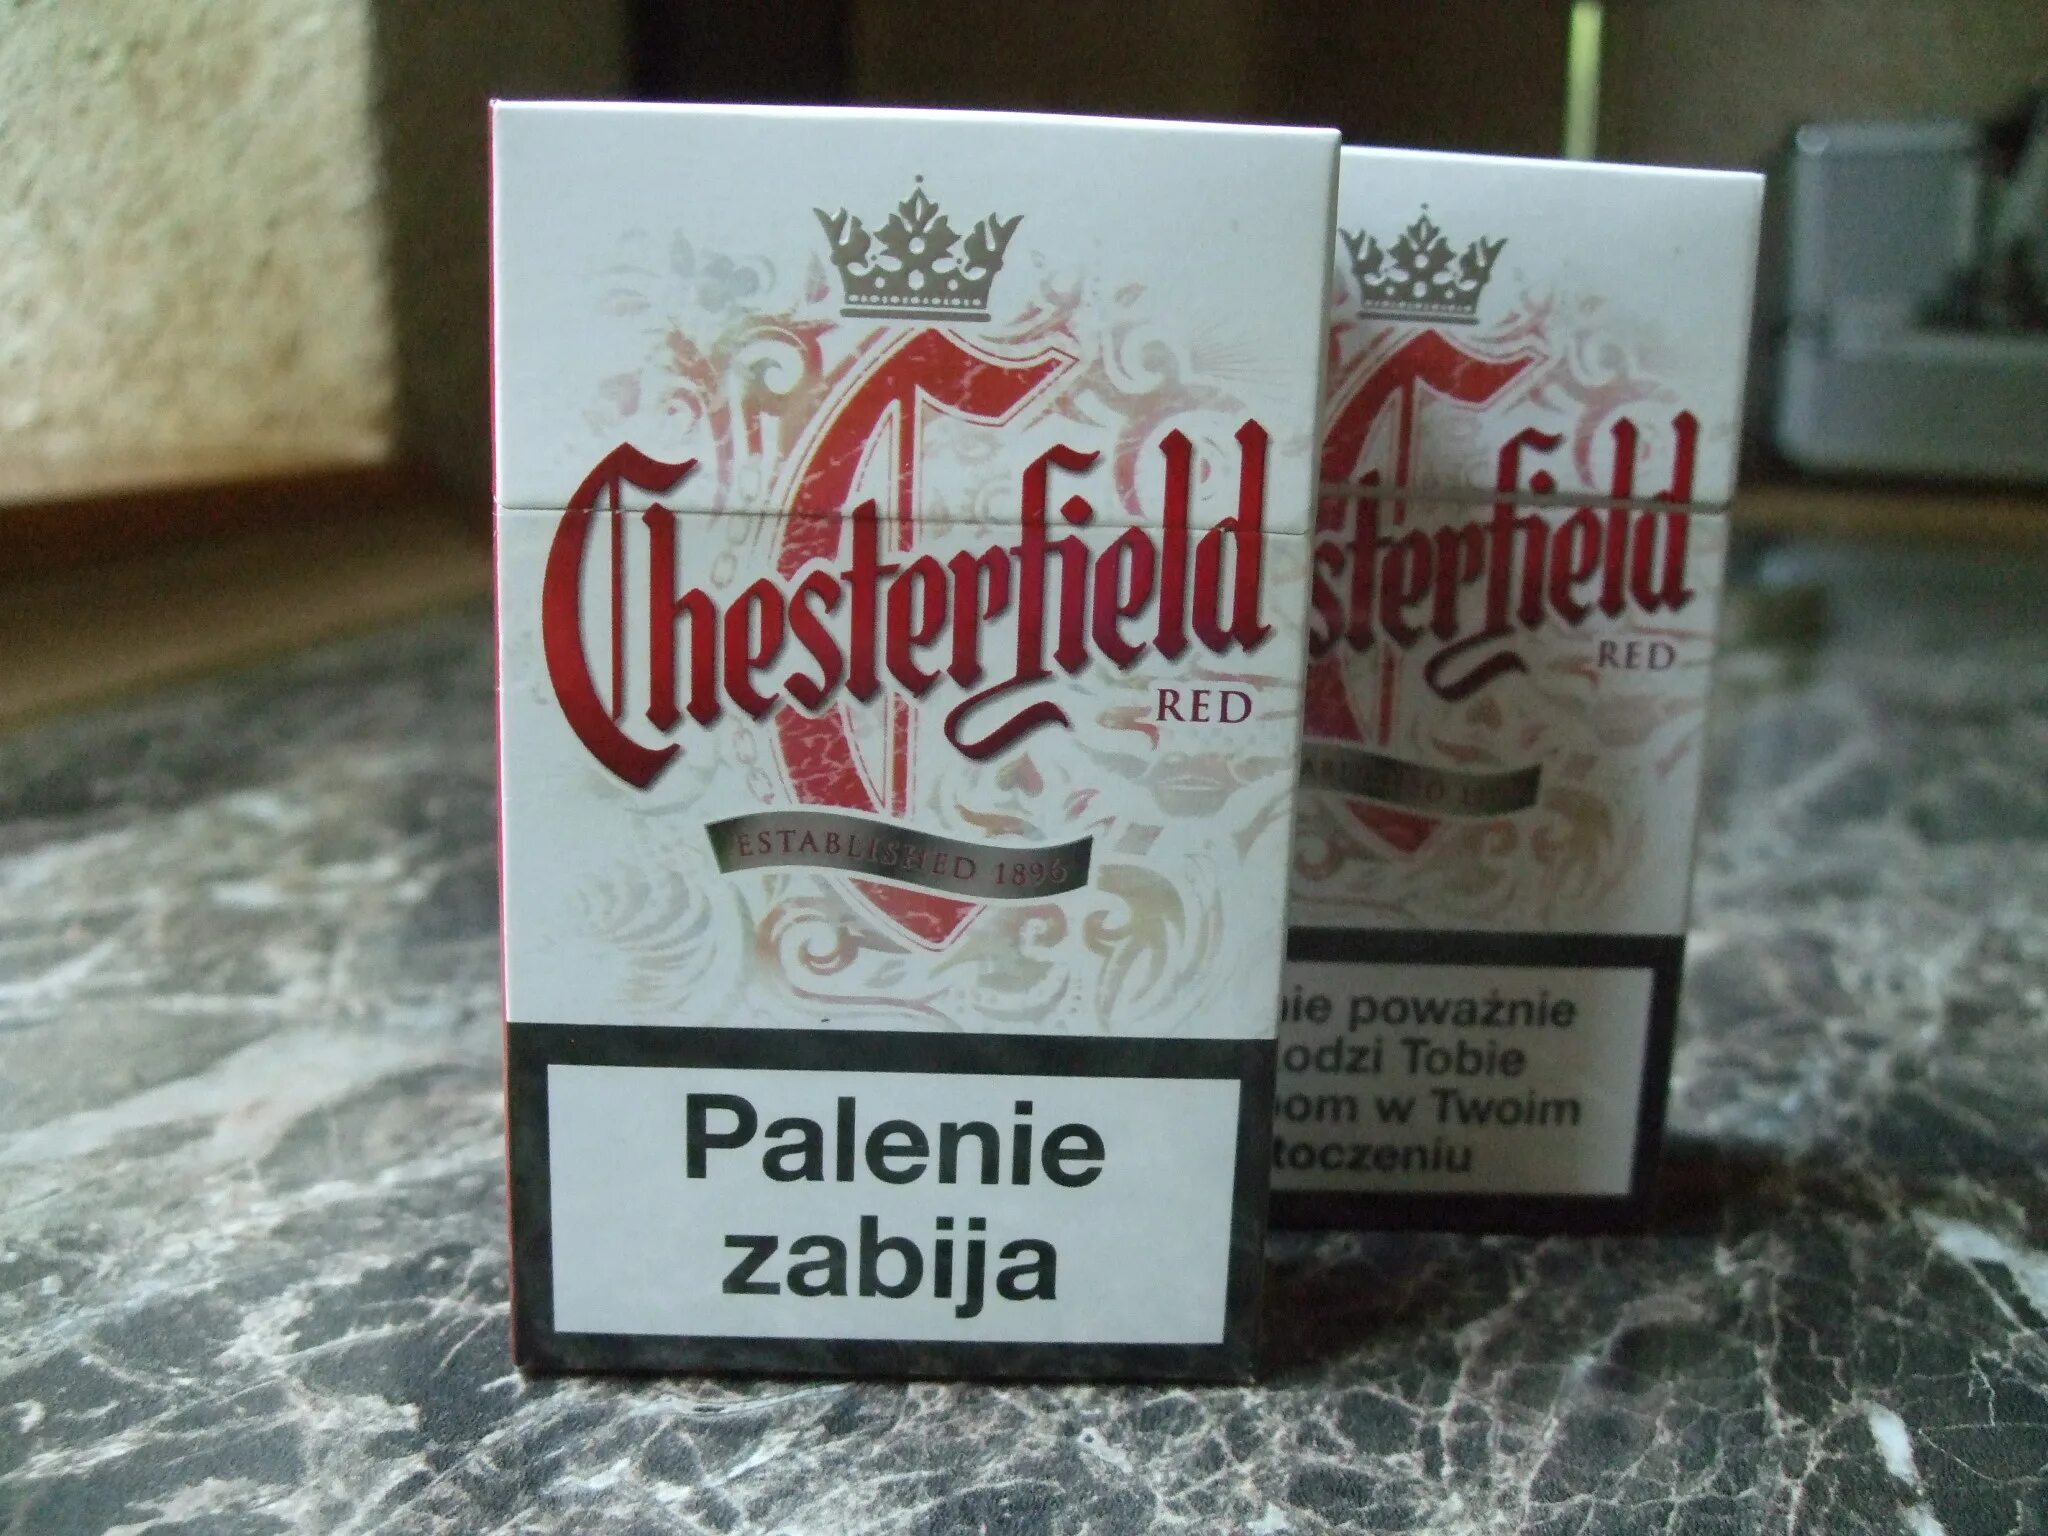 Честерфилд компакт синий. Сигареты Честерфилд компакт. Сигареты Честер компакт красный. Сигареты Честер Честерфилд. Chesterfield Compact красный.